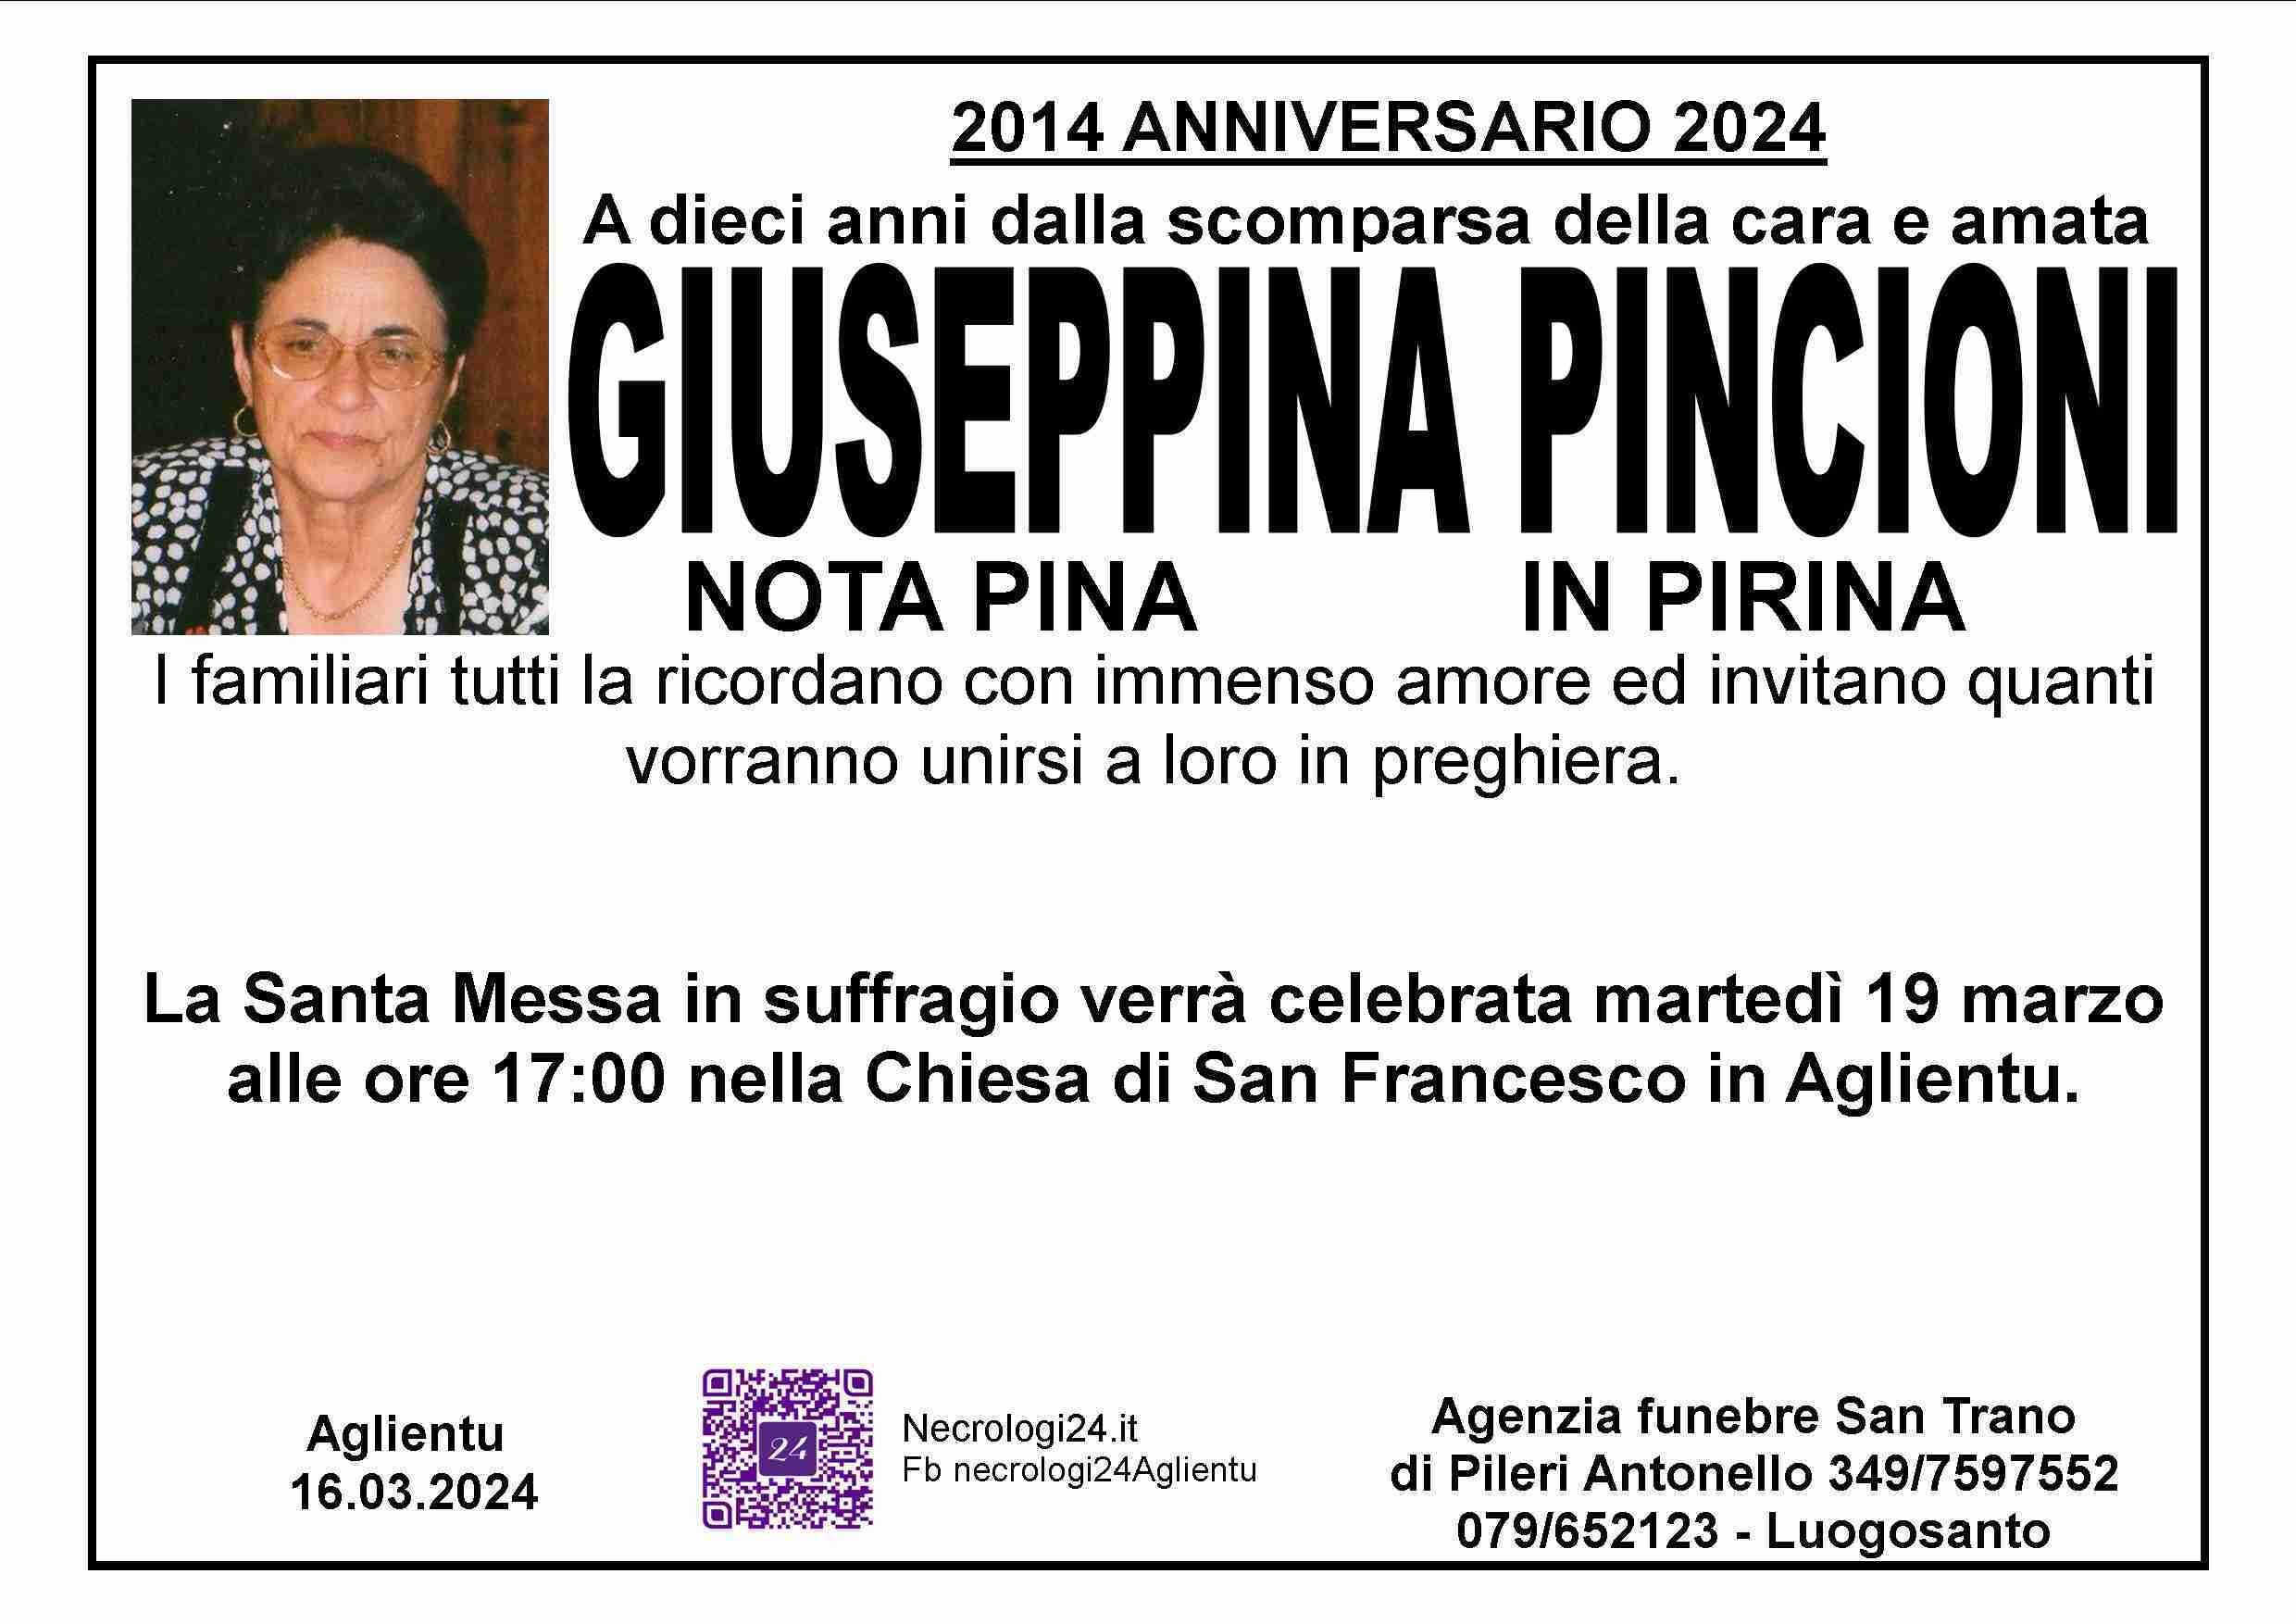 Giuseppina Pincioni